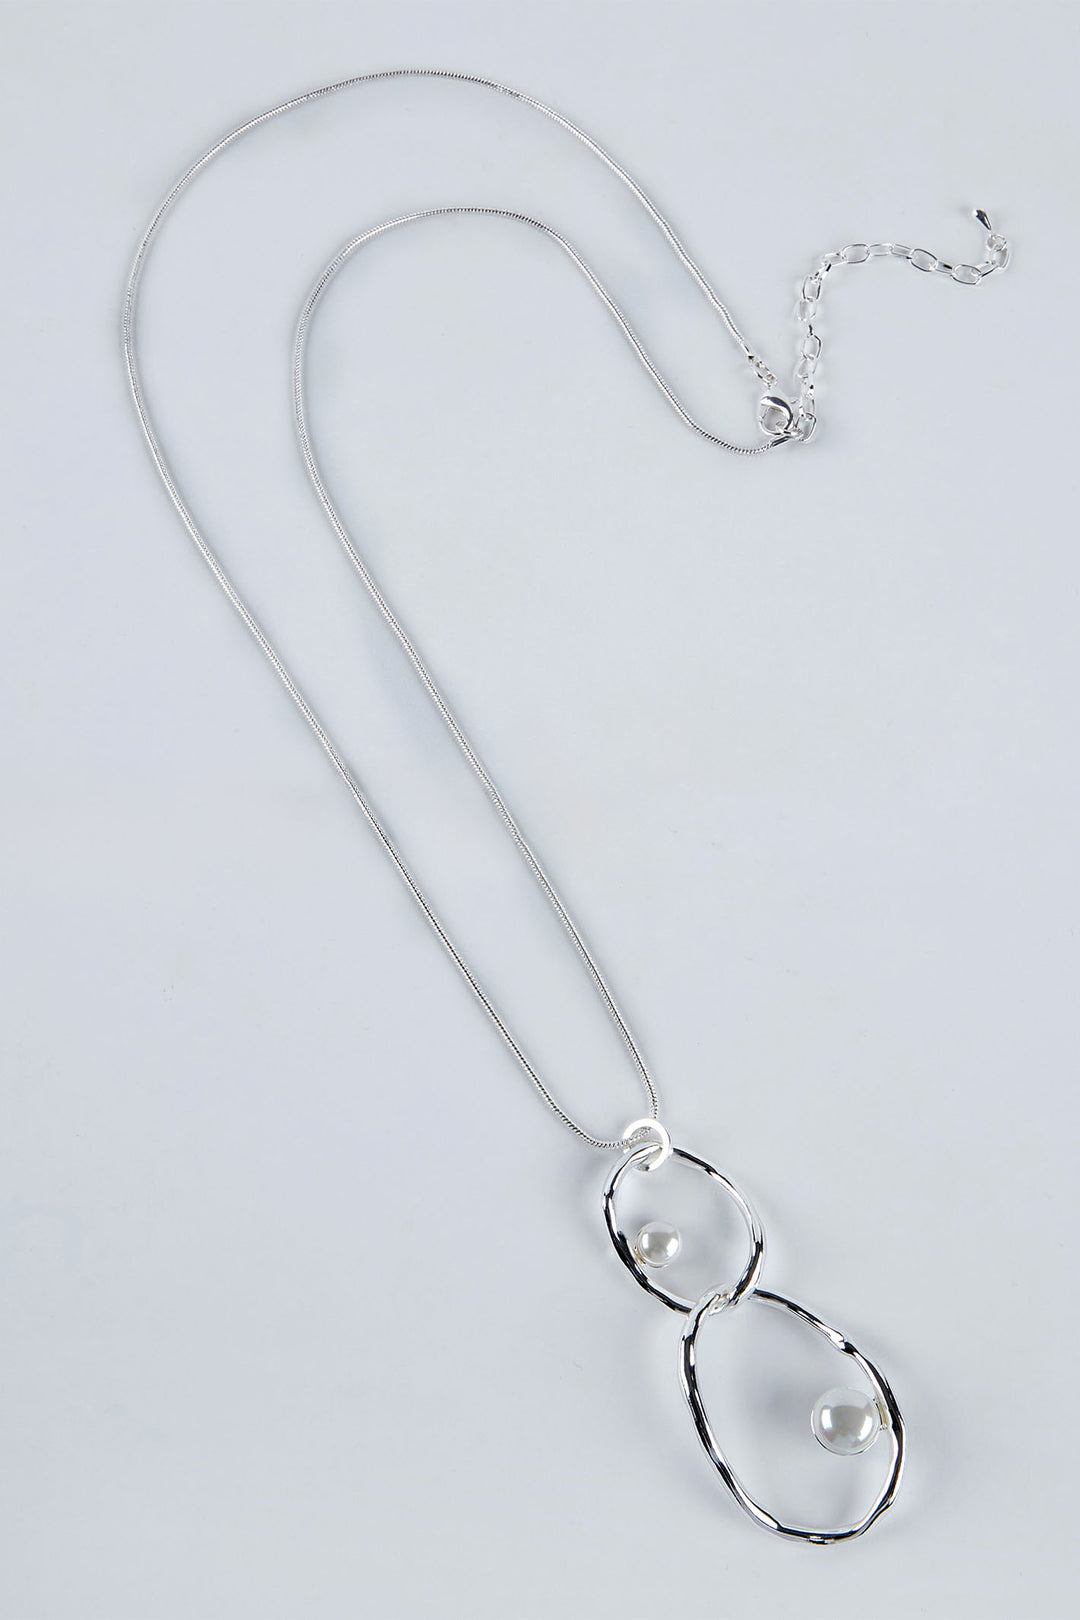 Dante NL48487 Silver & Pearl Drop Necklace - Experience Boutique